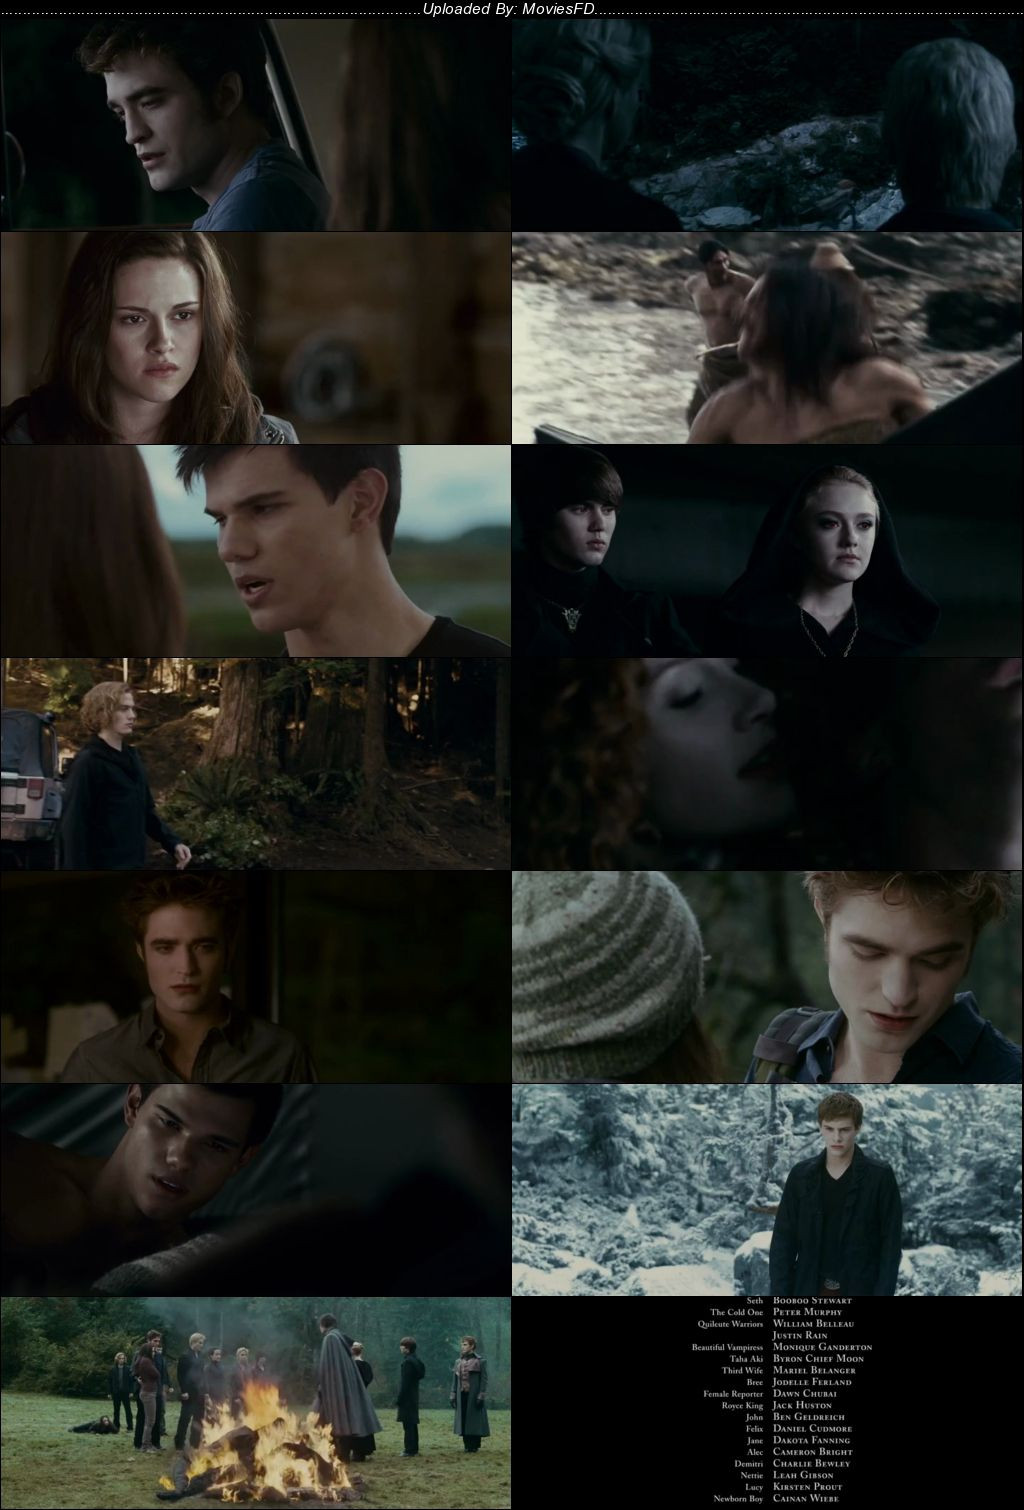 Download The Twilight Saga: Eclipse (2010) BluRay [Hindi + English] ESub 480p 720p